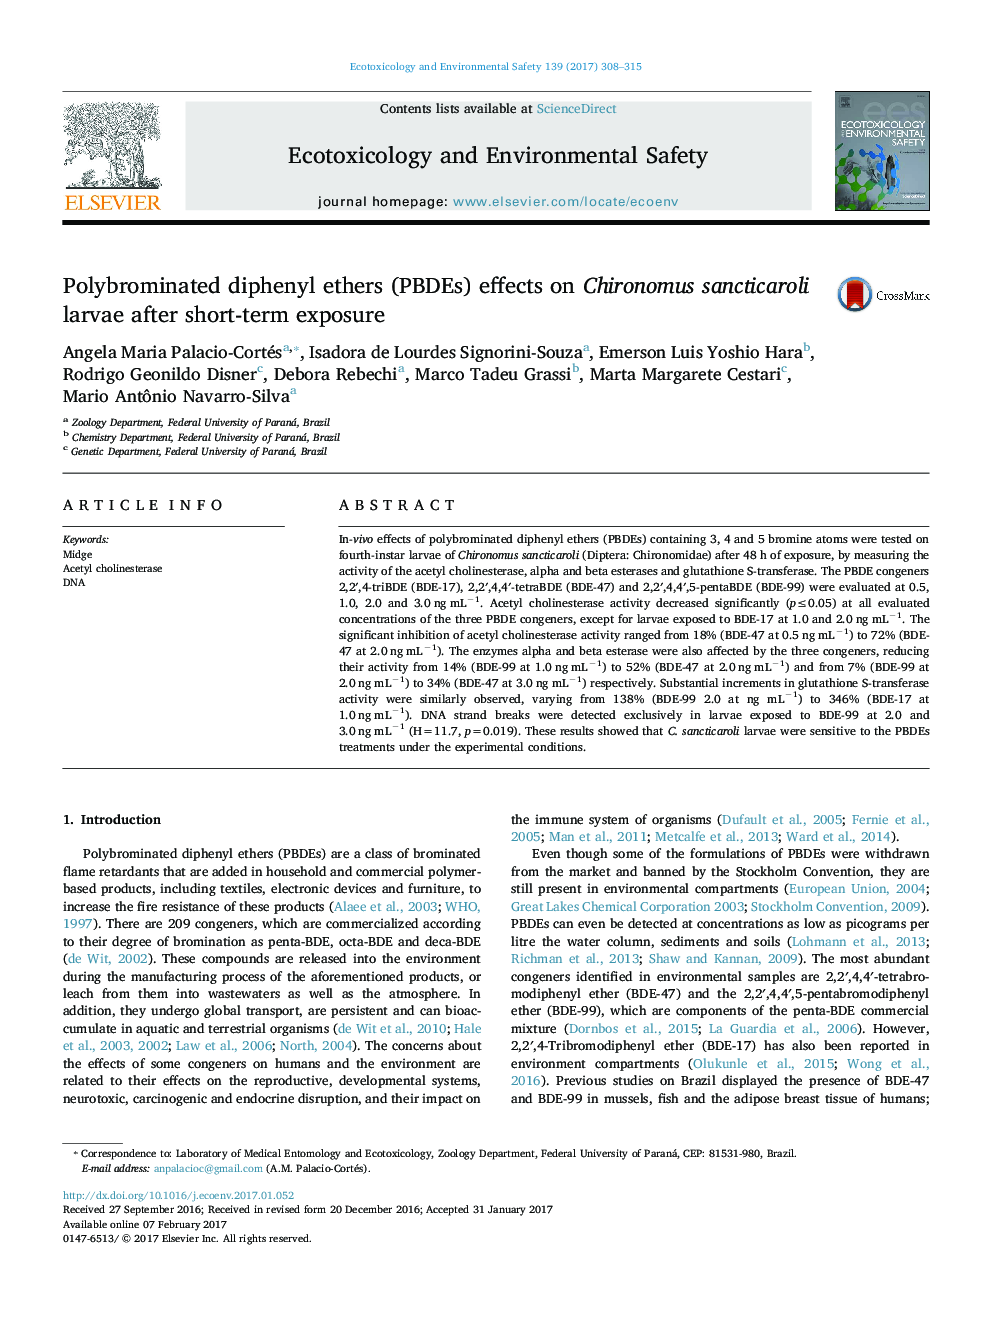 Polybrominated diphenyl ethers (PBDEs) effects on Chironomus sancticaroli larvae after short-term exposure